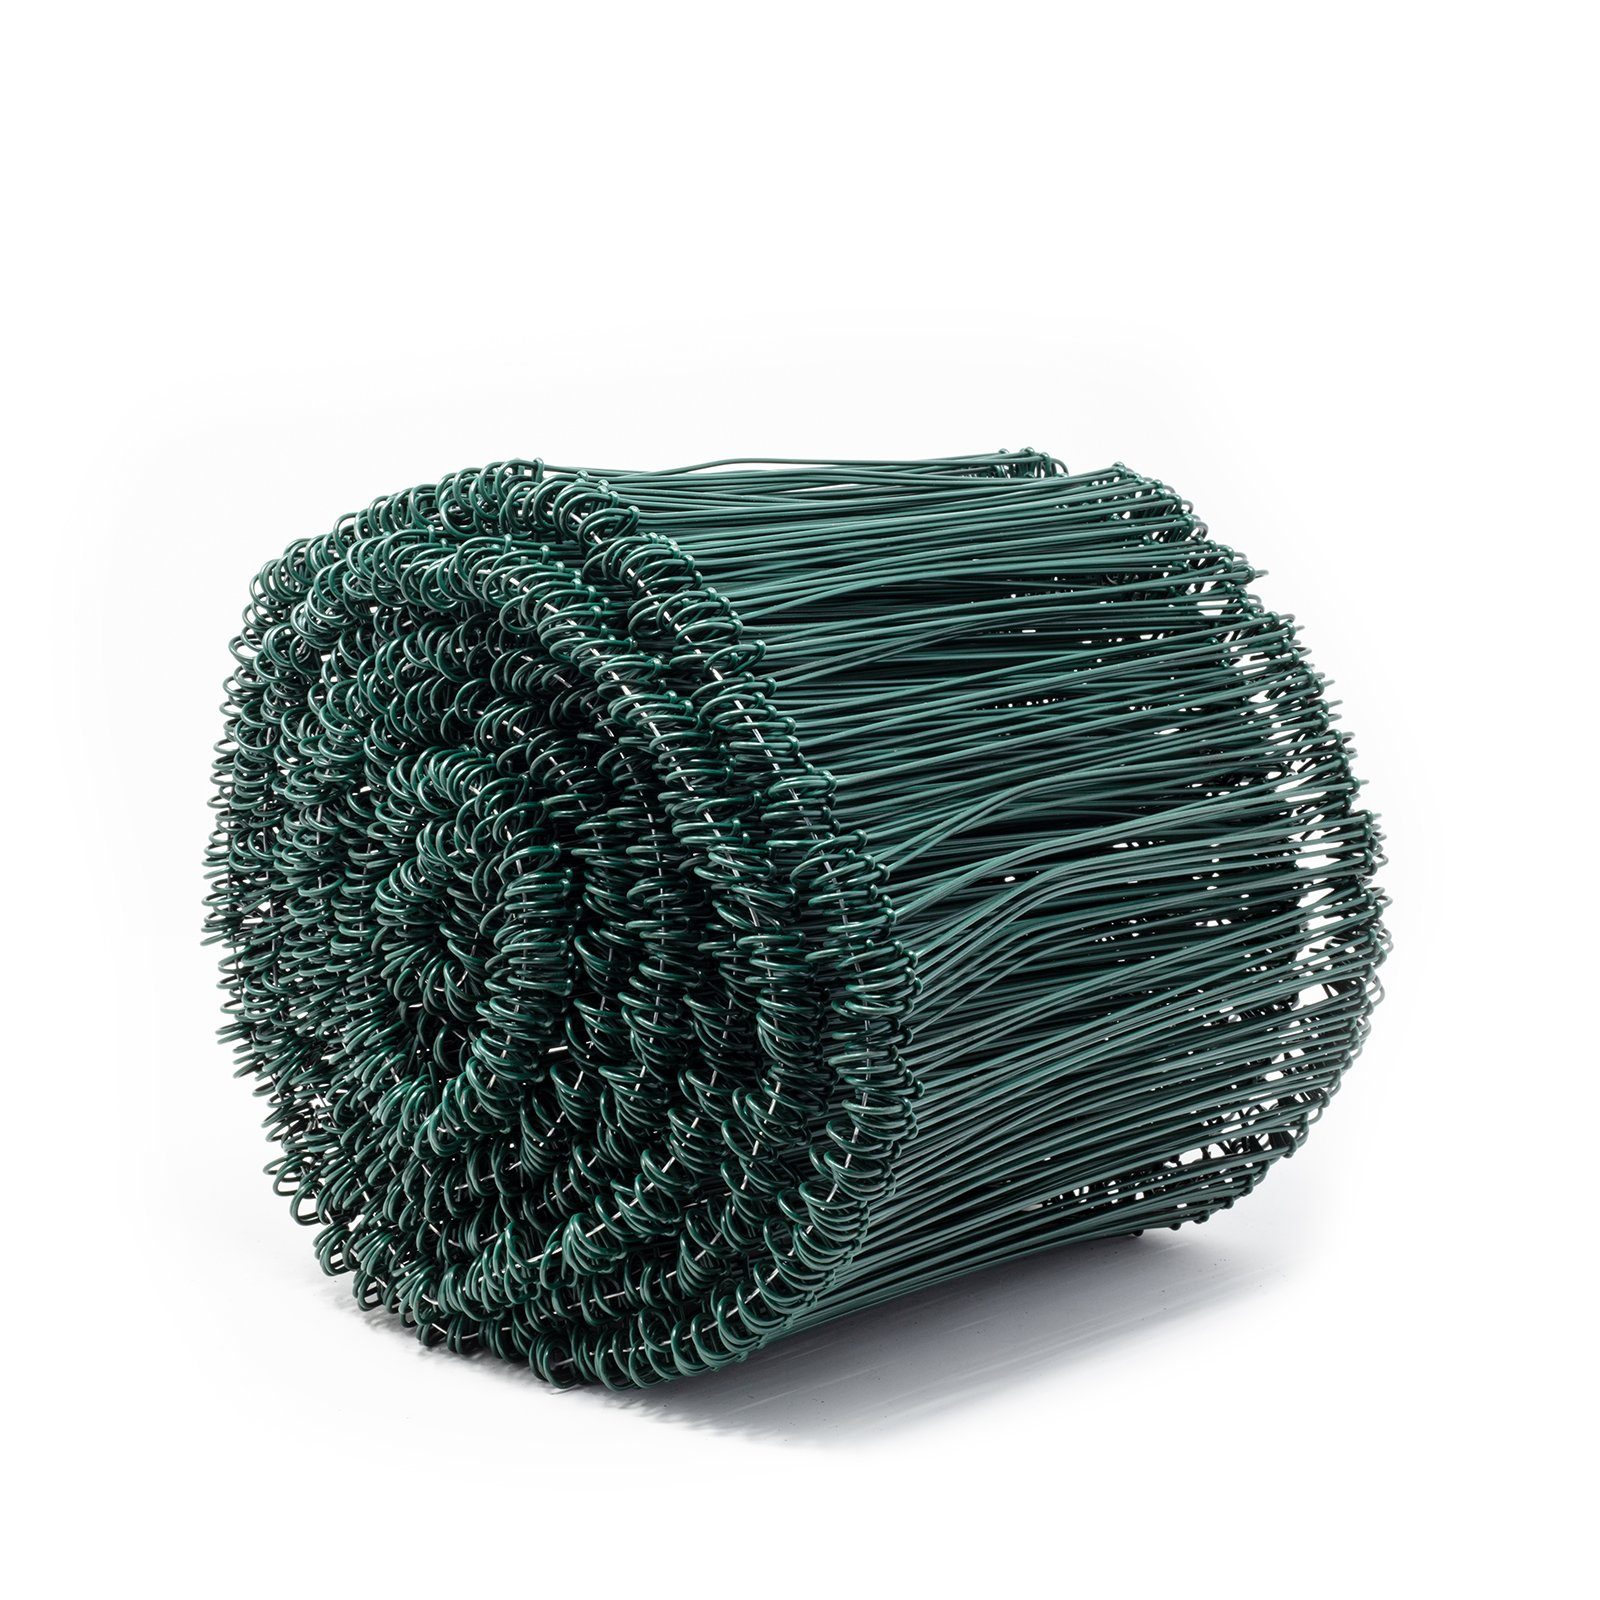 H & R GmbH Draht Ösenbindedraht kunststoffummantelt grün - 1,0/1,4 x 200 mm Bunde von 1000 Stück | Drähte